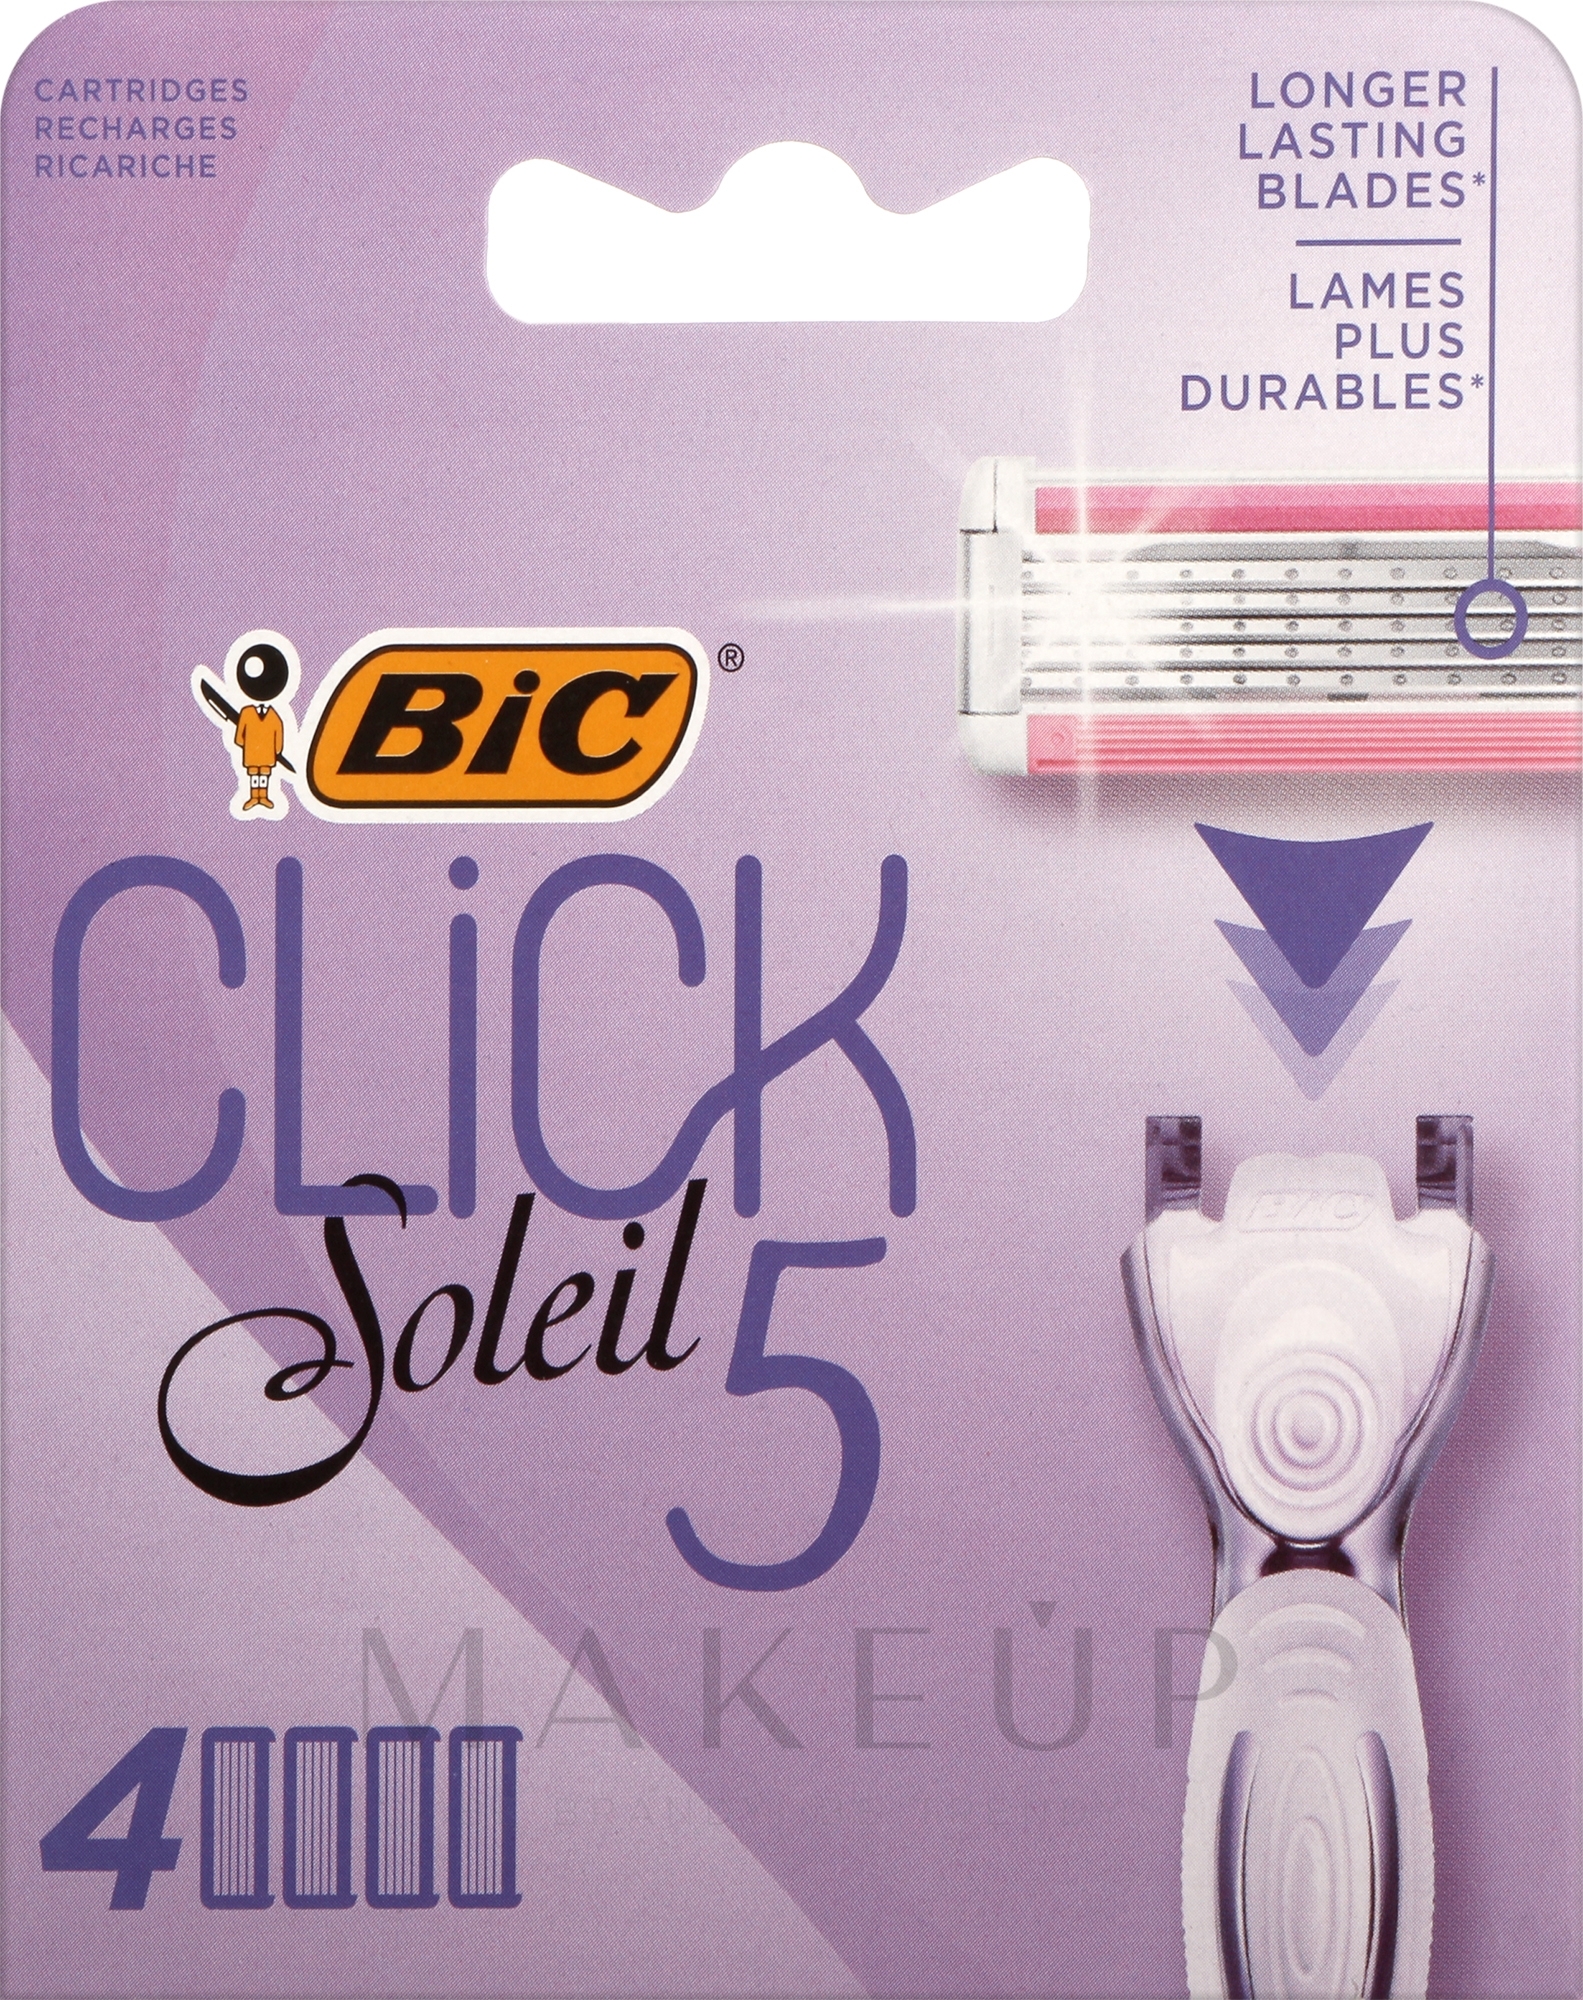 Ersatzklingen 4 St. - Bic Click 5 Soleil Sensitive — Bild 4 St.